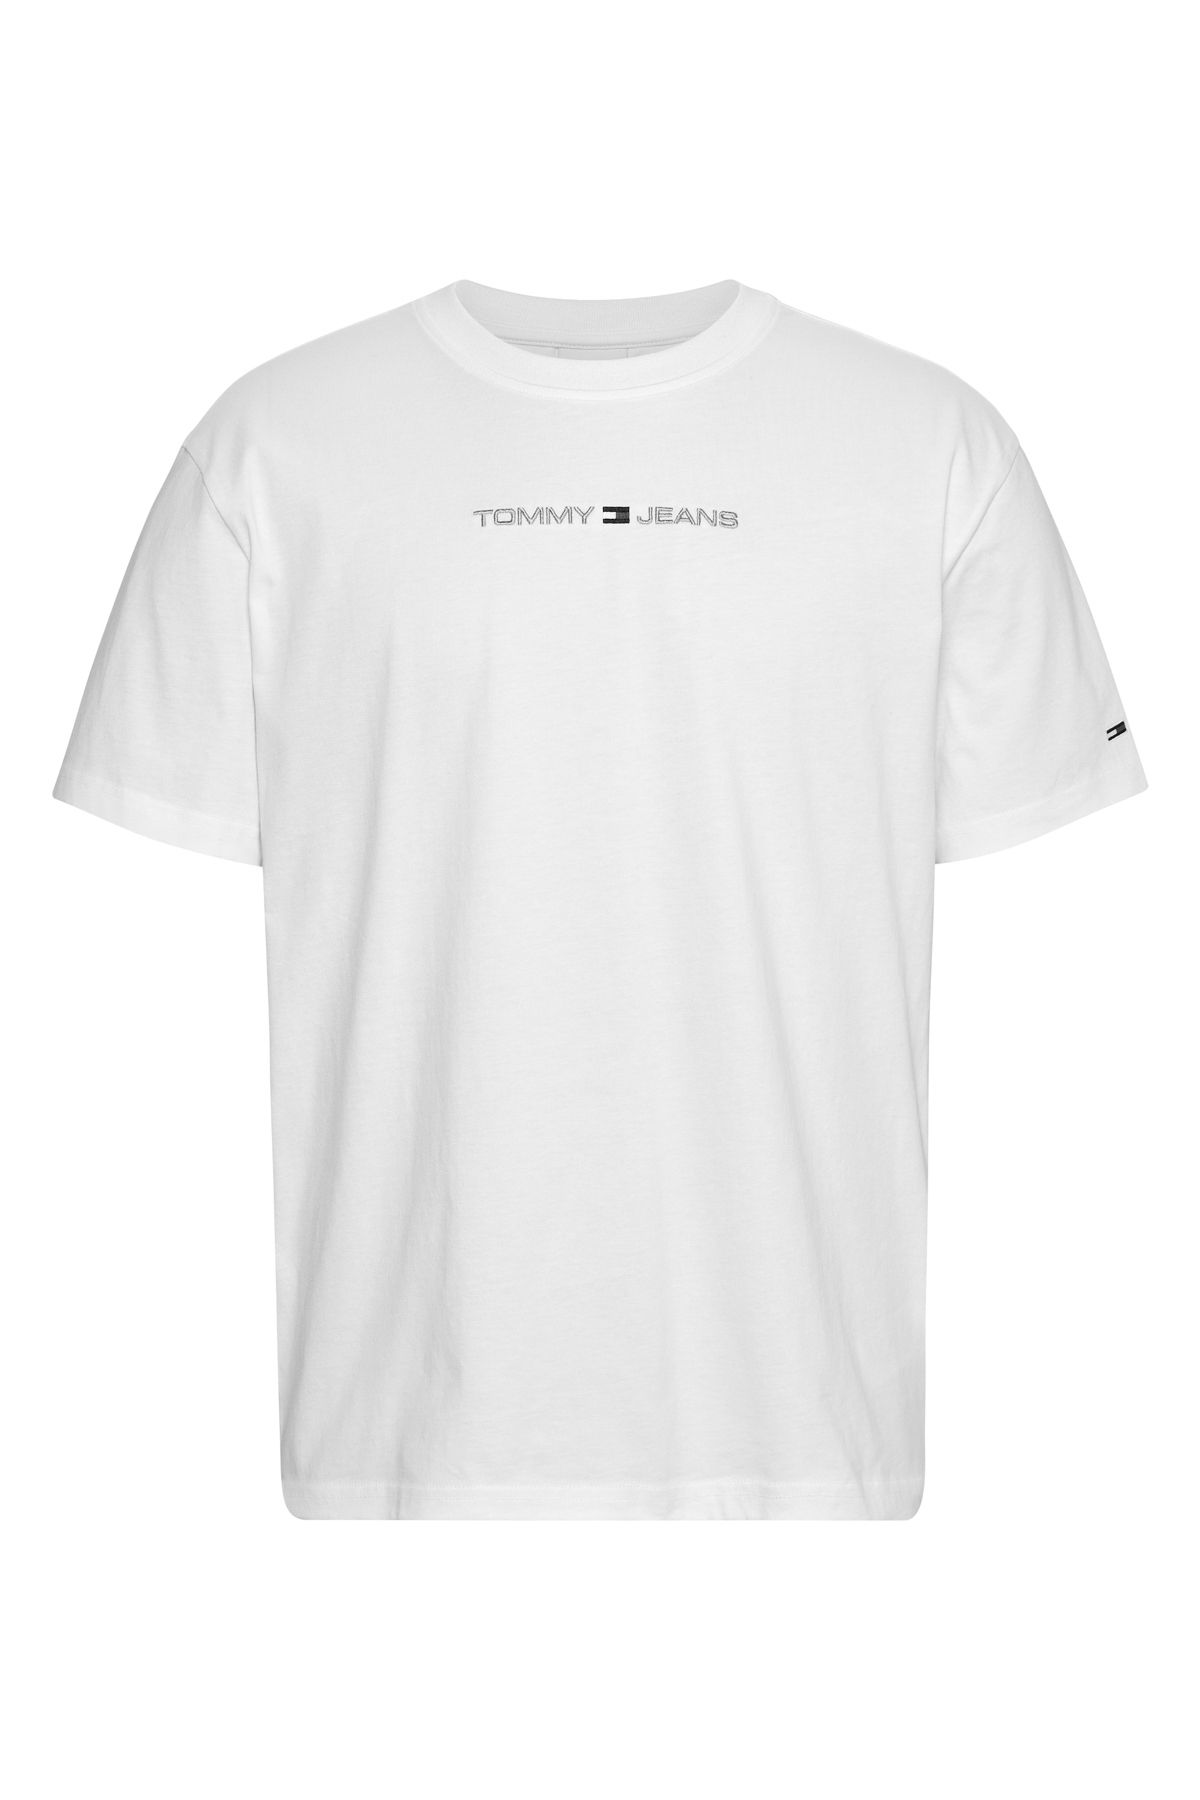 Tommy Hilfiger T-Shirt Erkek Yorumları Trendyol White Fiyatı, 